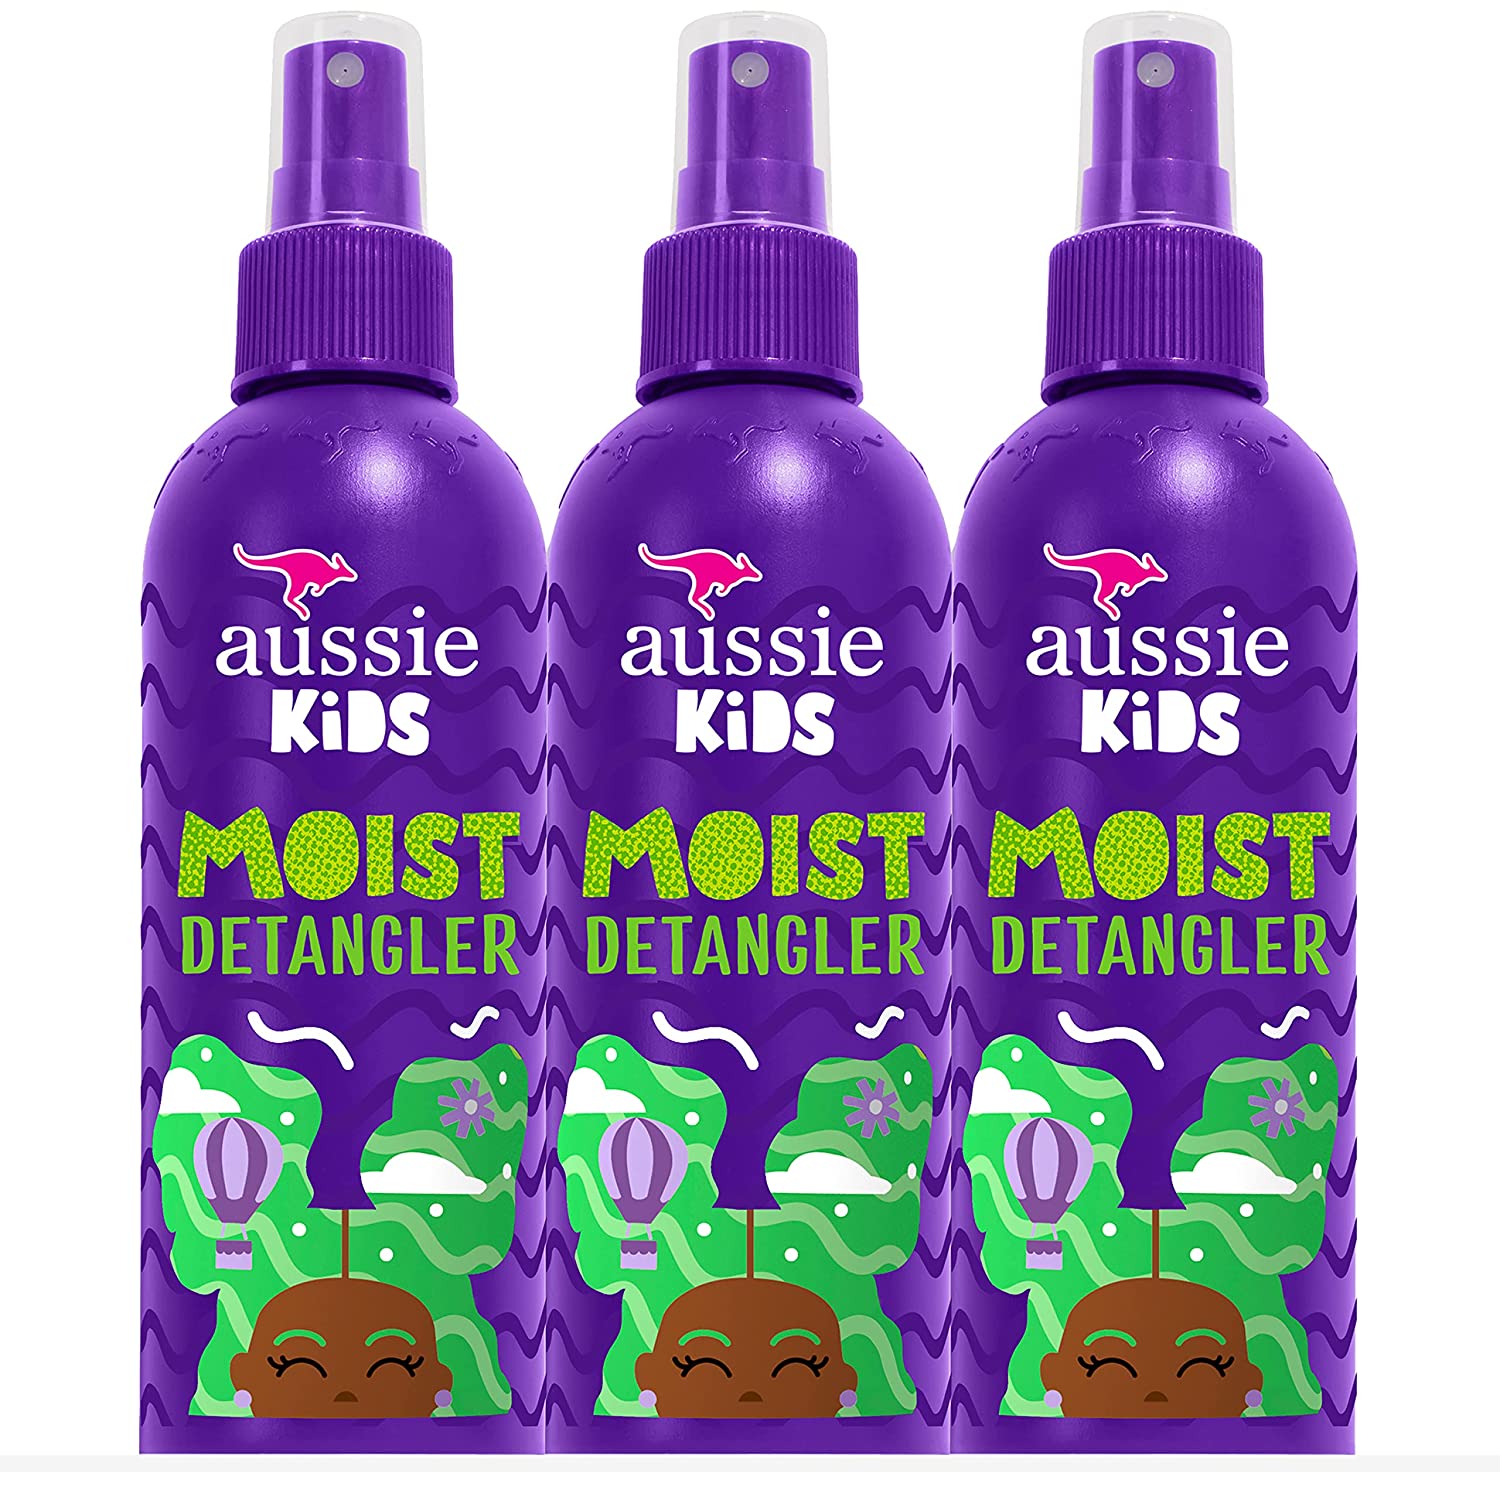 Aussie Kids Sulfate-Free Detangling Spray, 3-Count